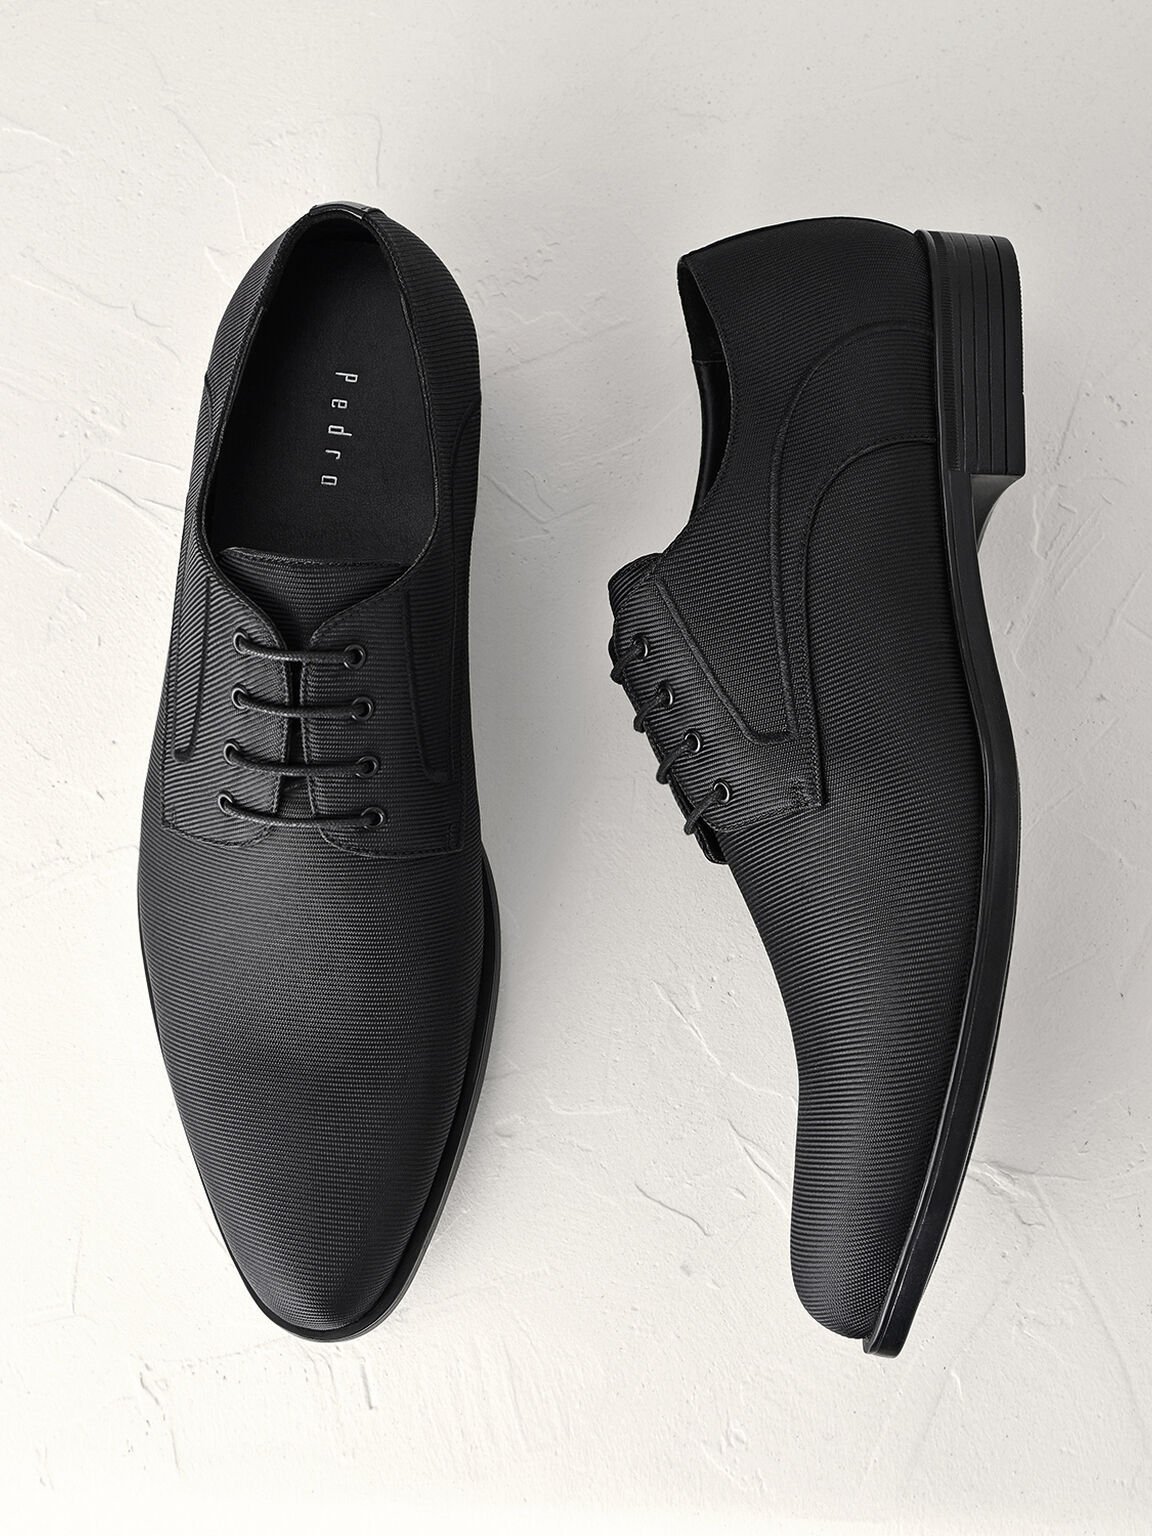 Pointed Toe Derby Shoes, Black, hi-res